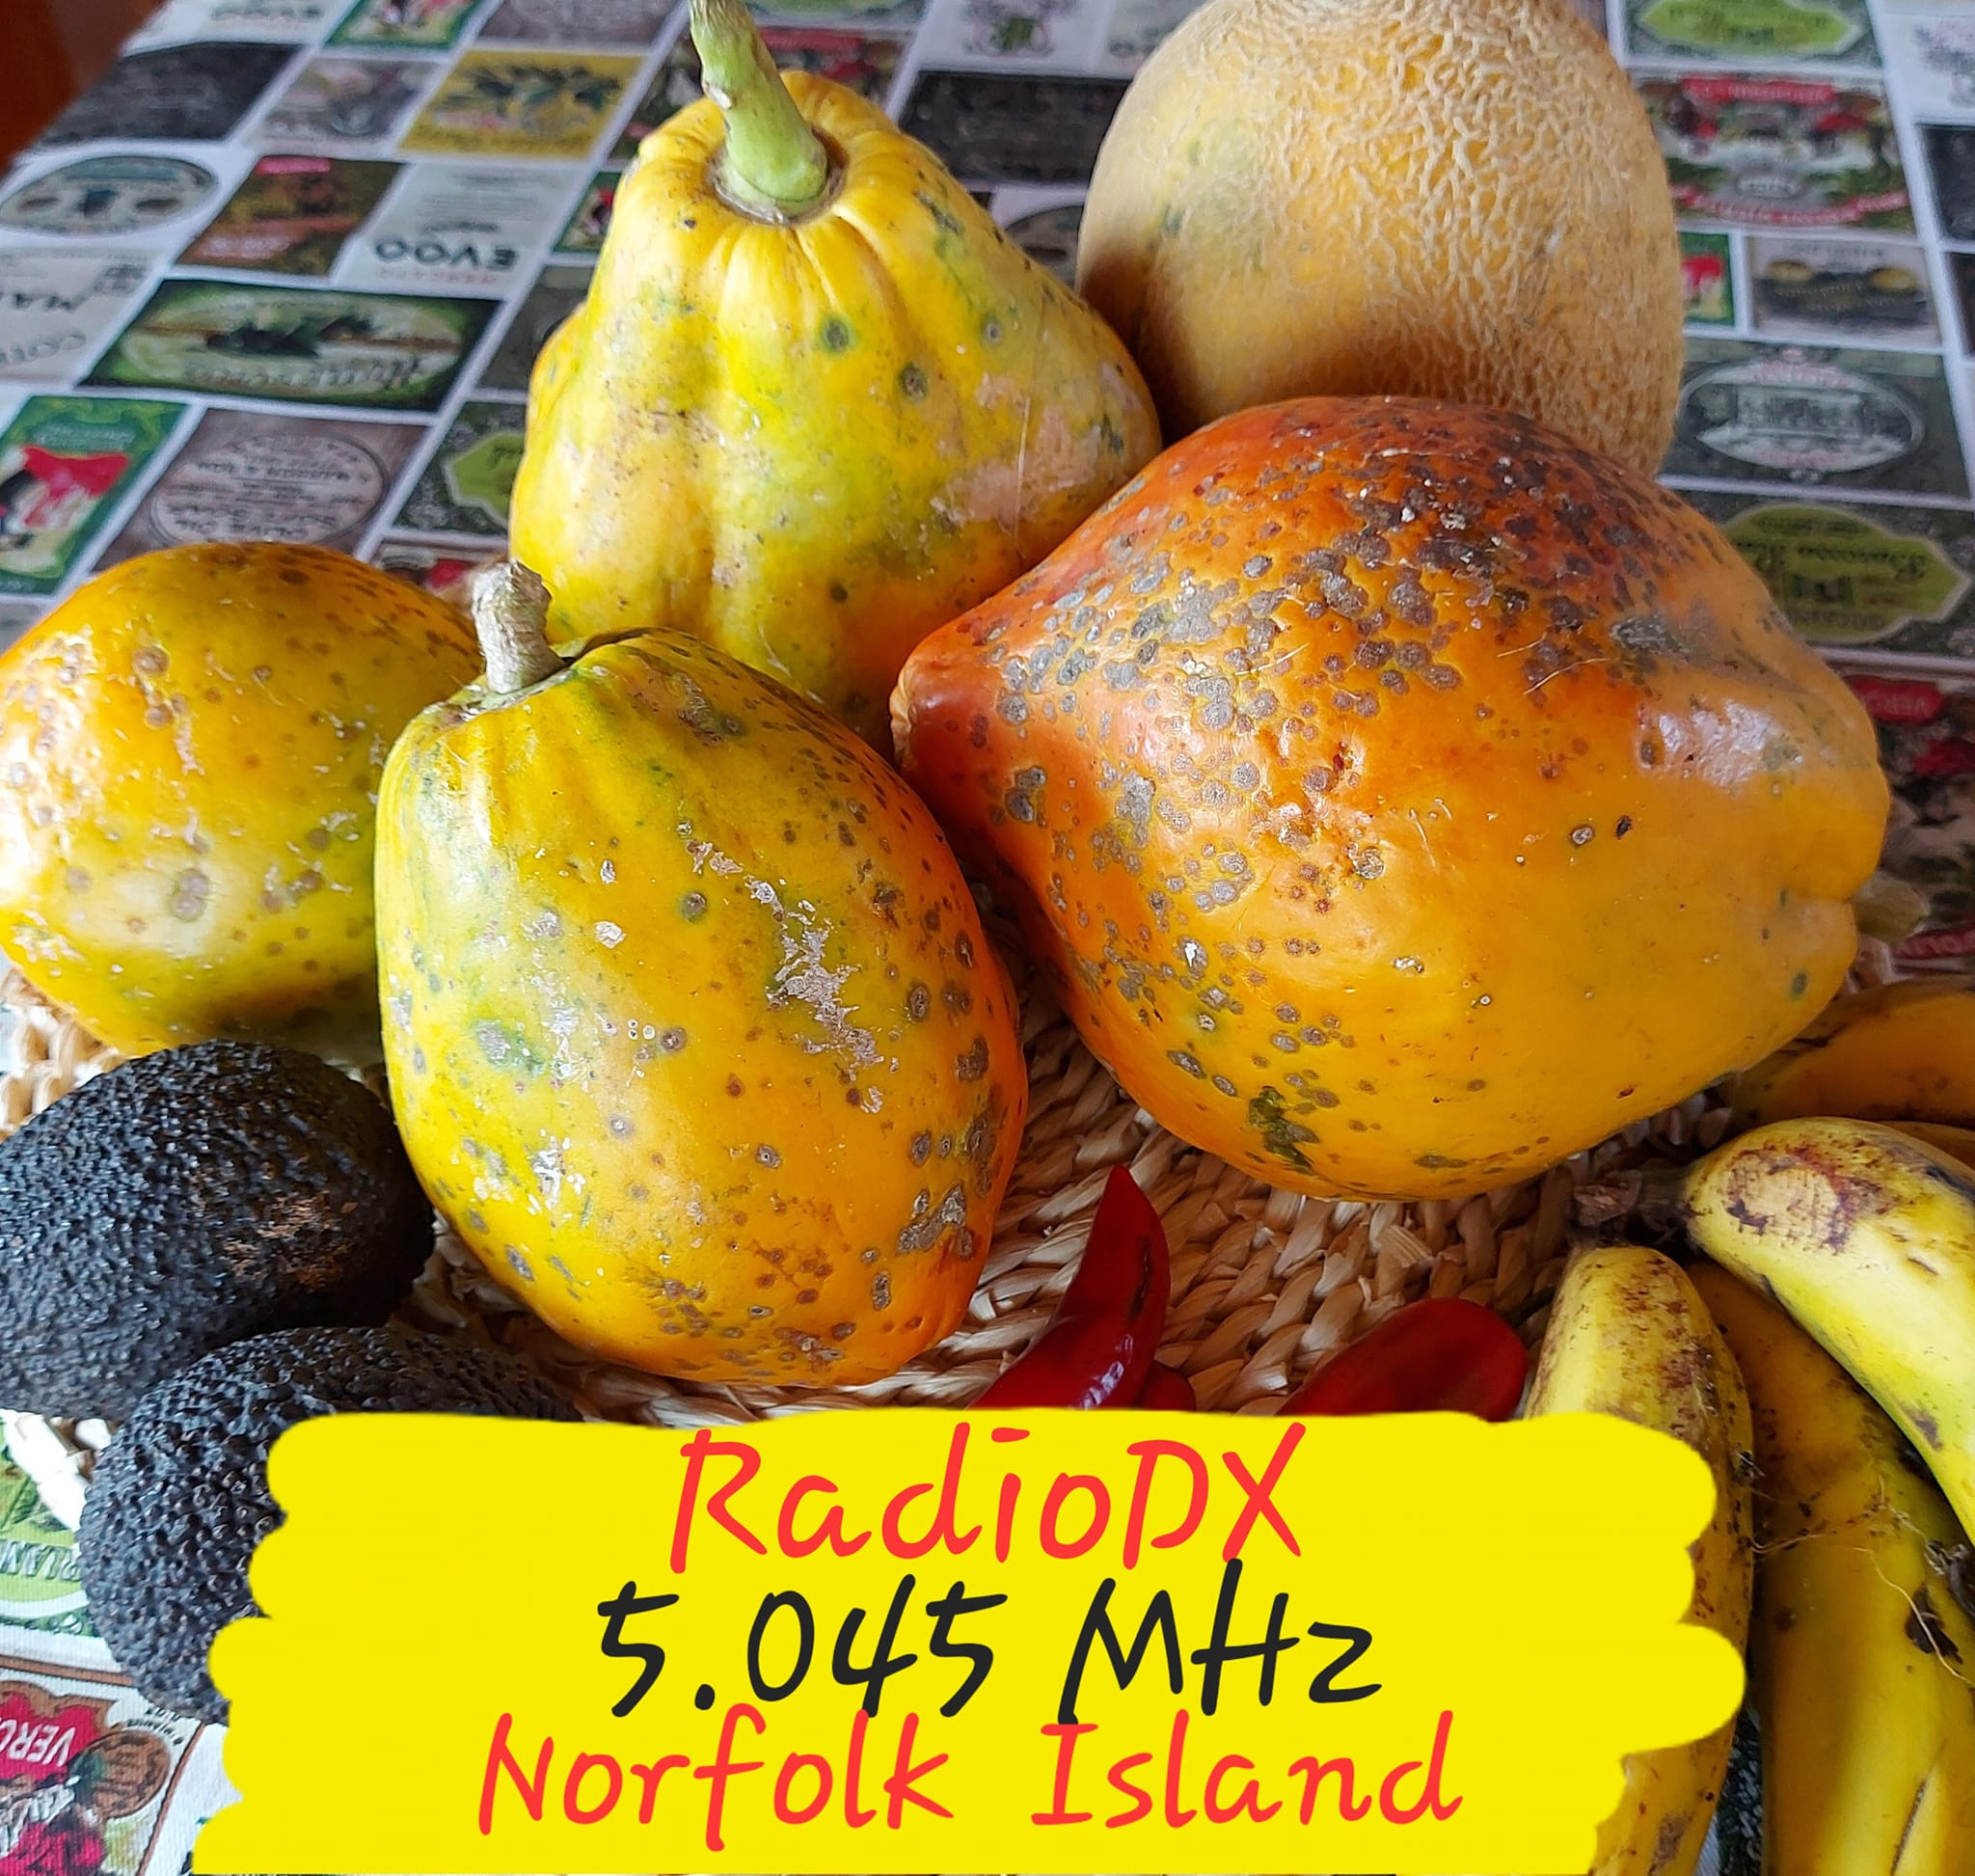 Radio DX Norfolk Island